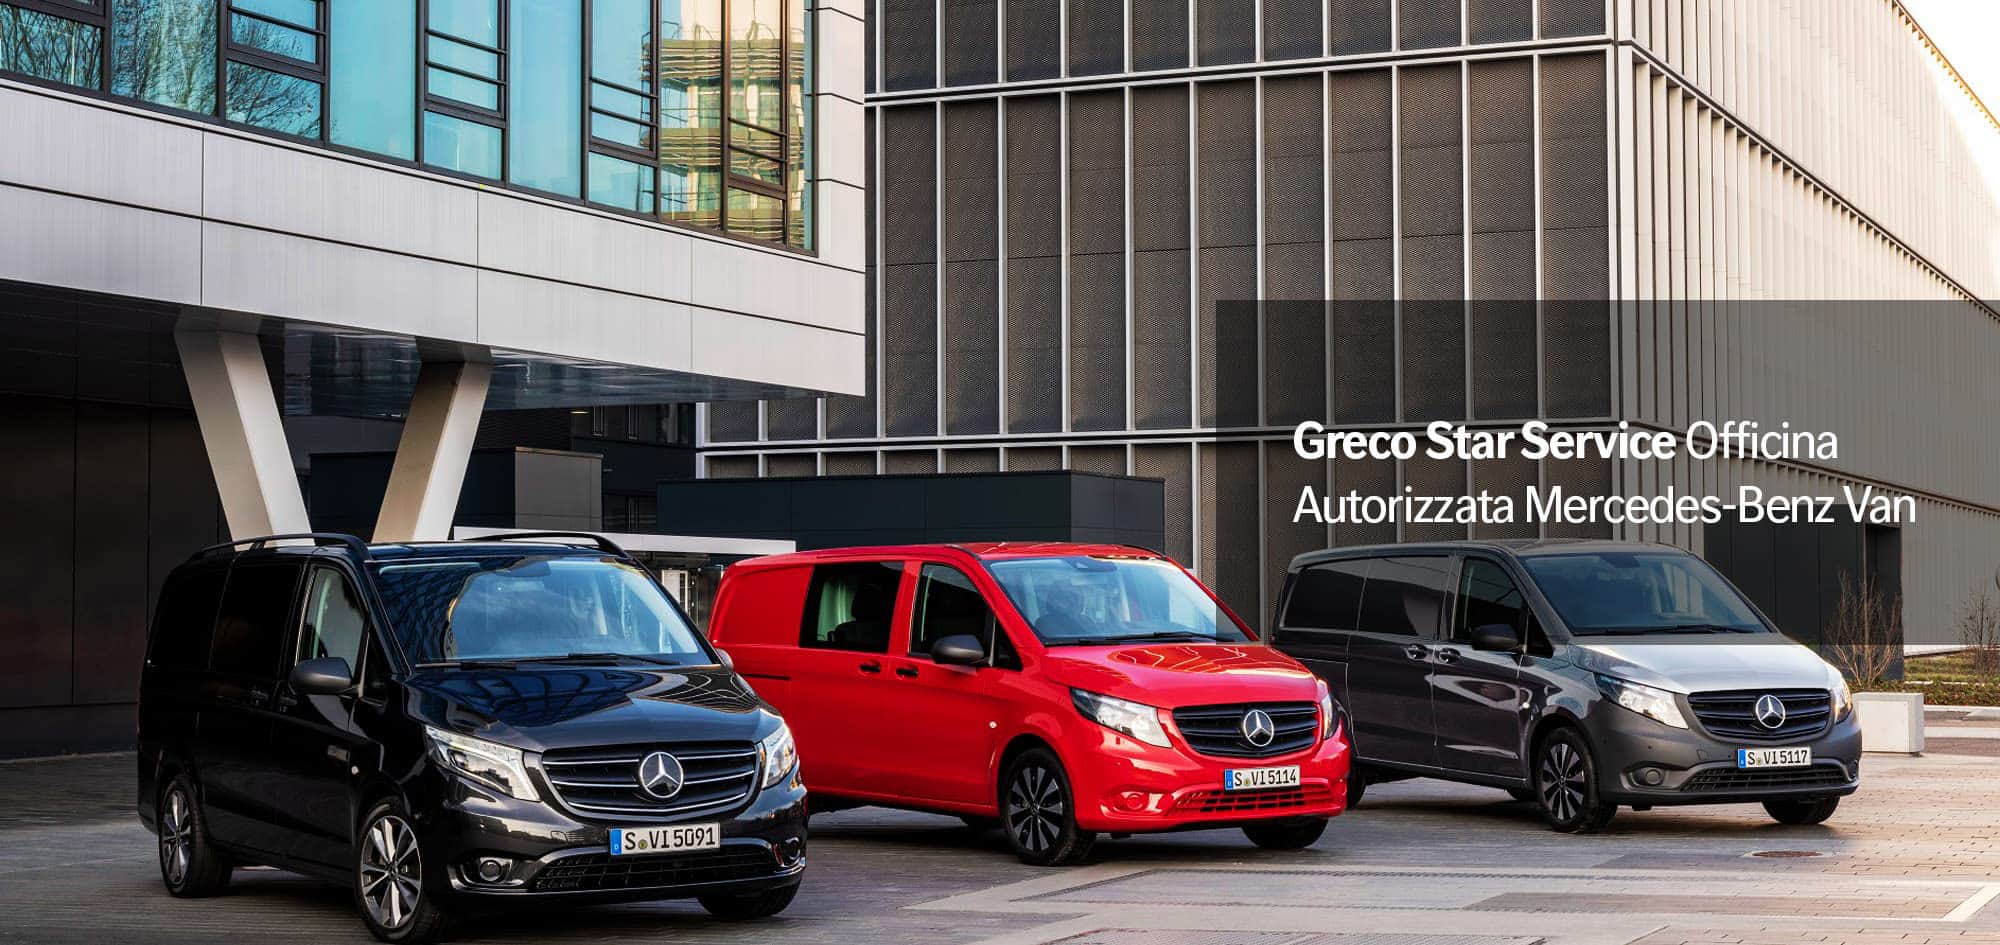 Greco Star Service è un'officina autorizzata Mercedes-Benz Van